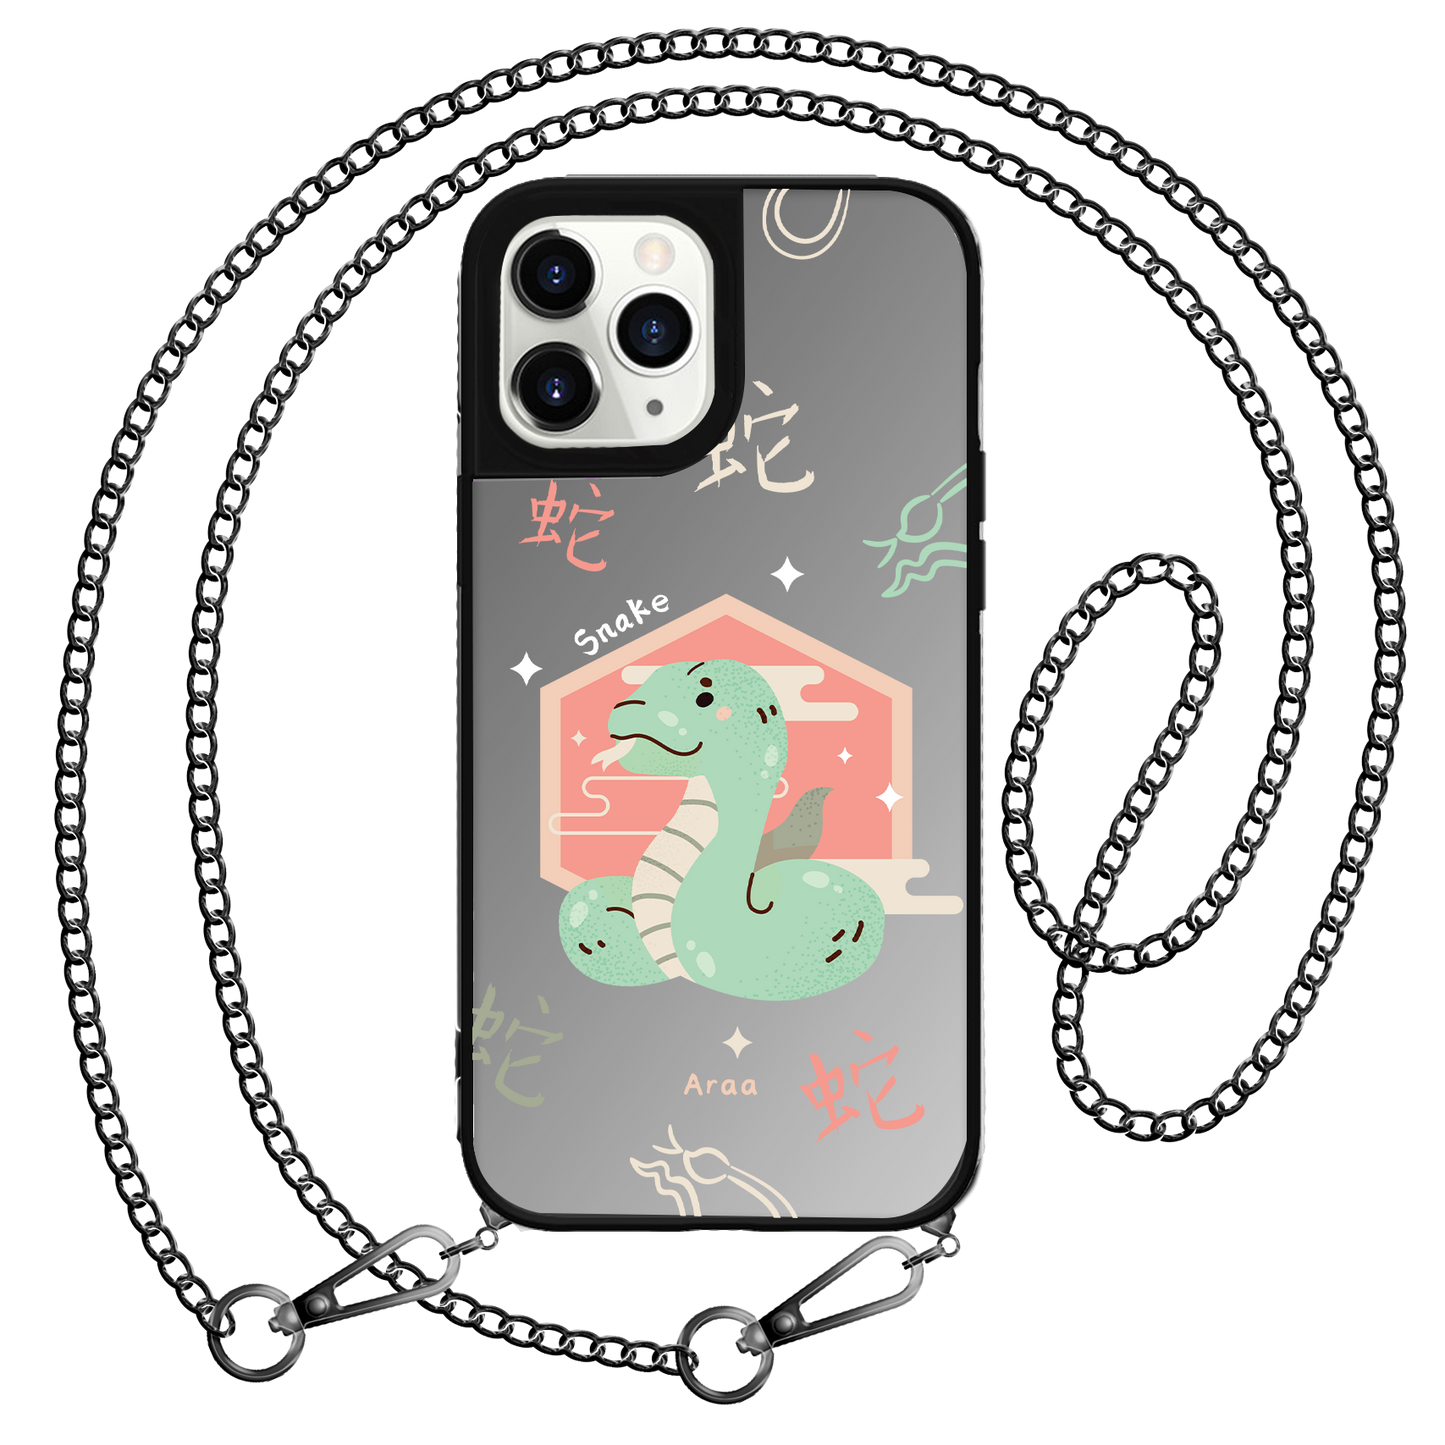 iPhone Mirror Grip Case -  Snake (Chinese Zodiac / Shio)